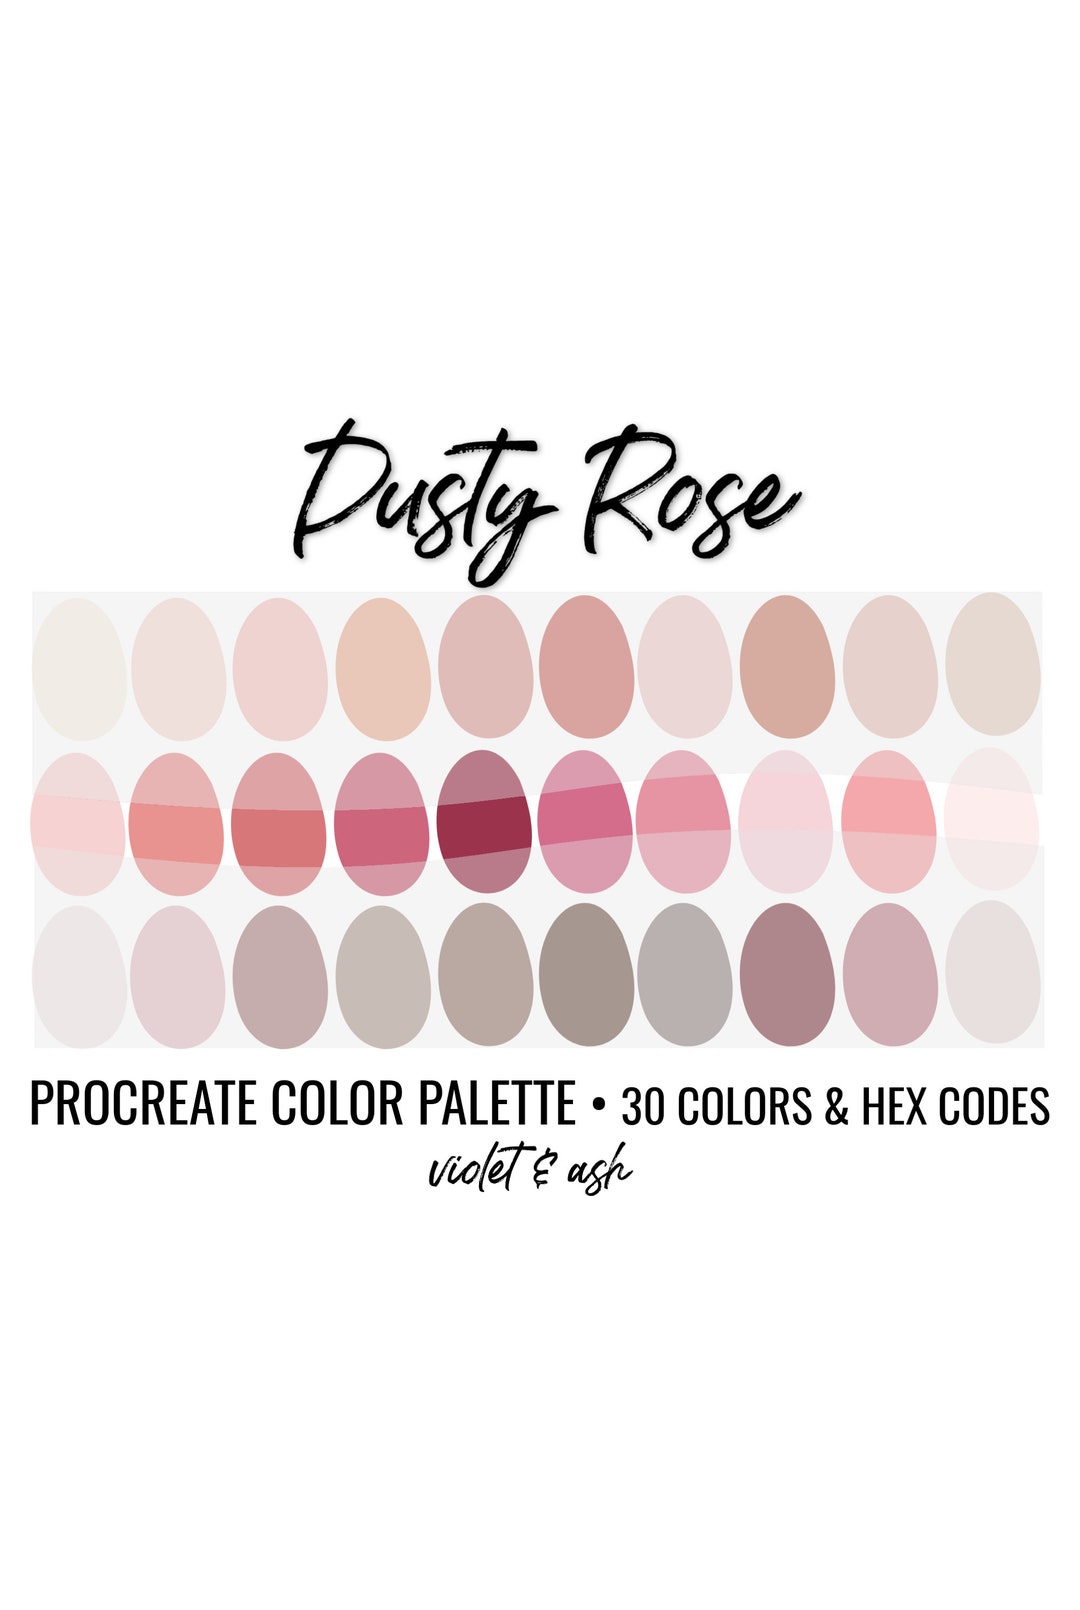 Dusty Rose Procreate Palette Color Chart Procreate - Etsy